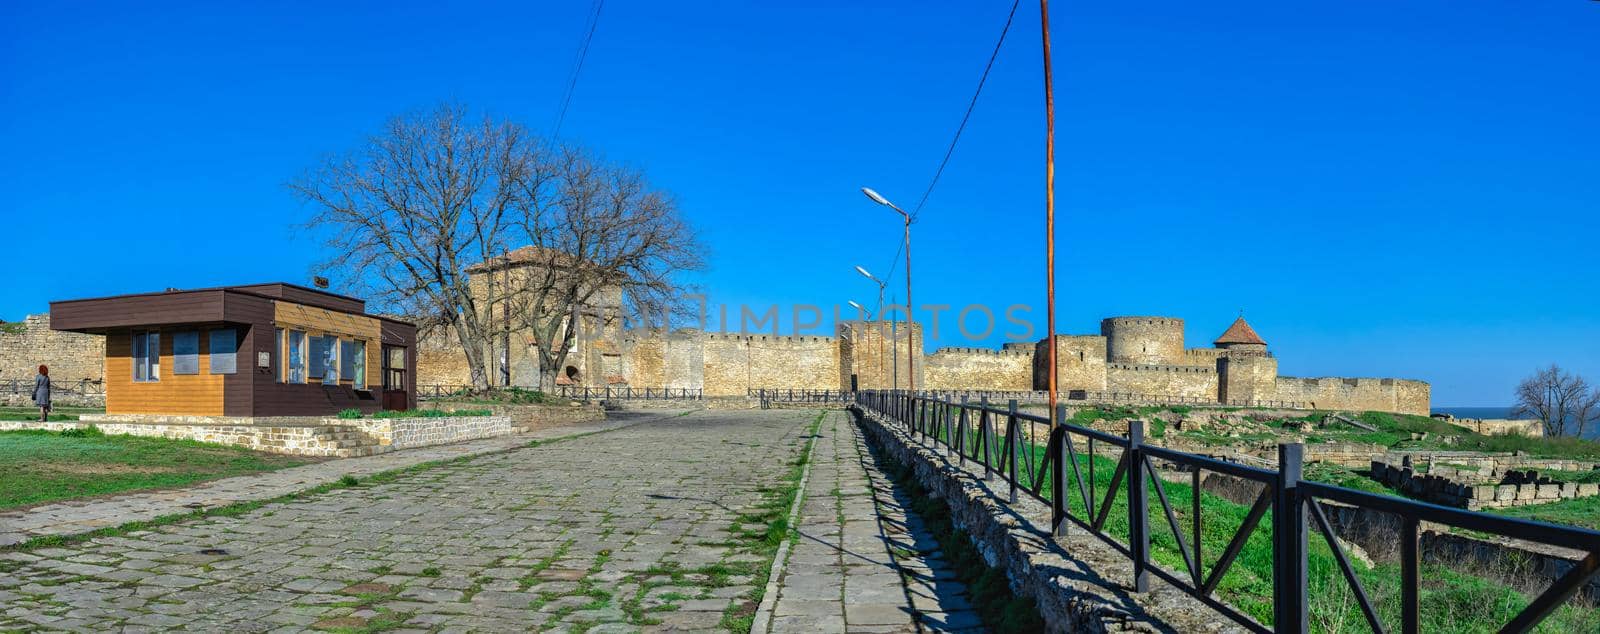 24.04.2021. Bilhorod-Dnistrovskyi or Akkerman fortress, Odessa region, Ukraine, on a sunny spring morning